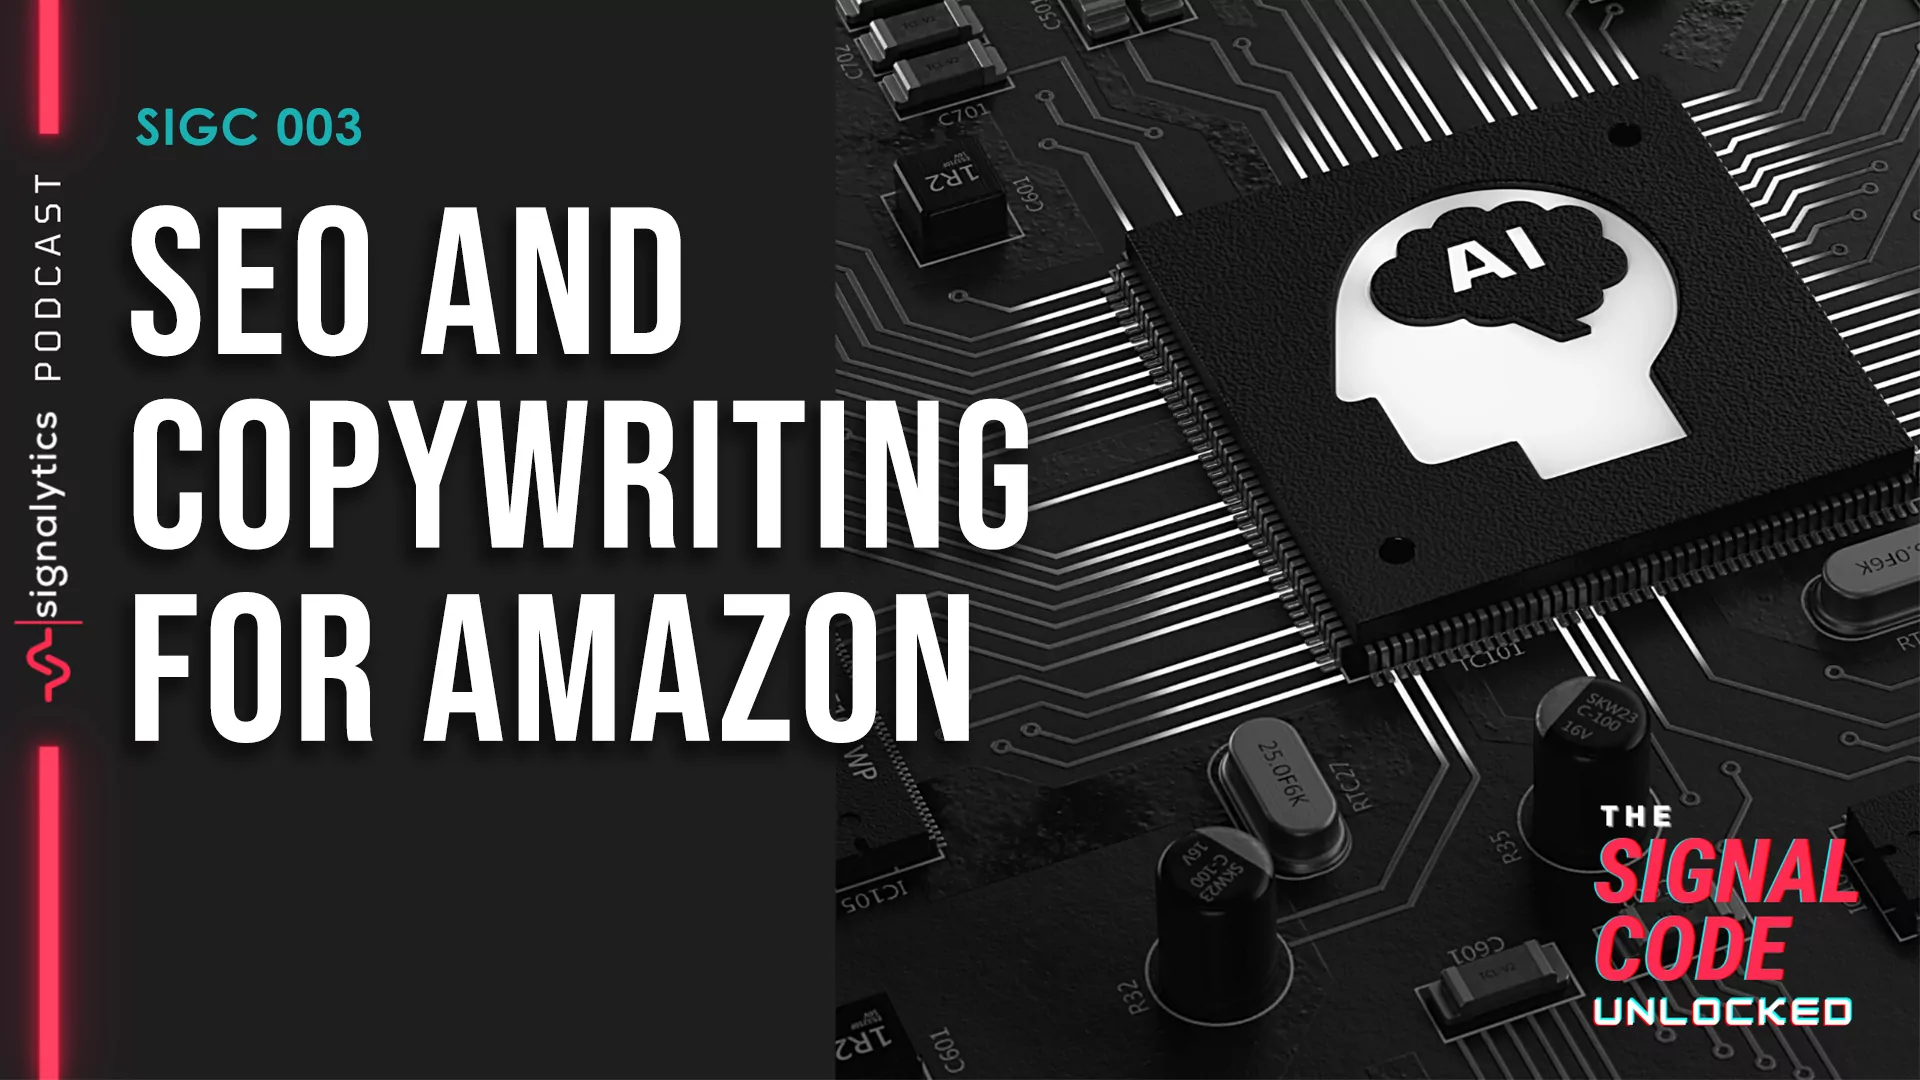 SIGC003 – SEO and Copywriting for Amazon